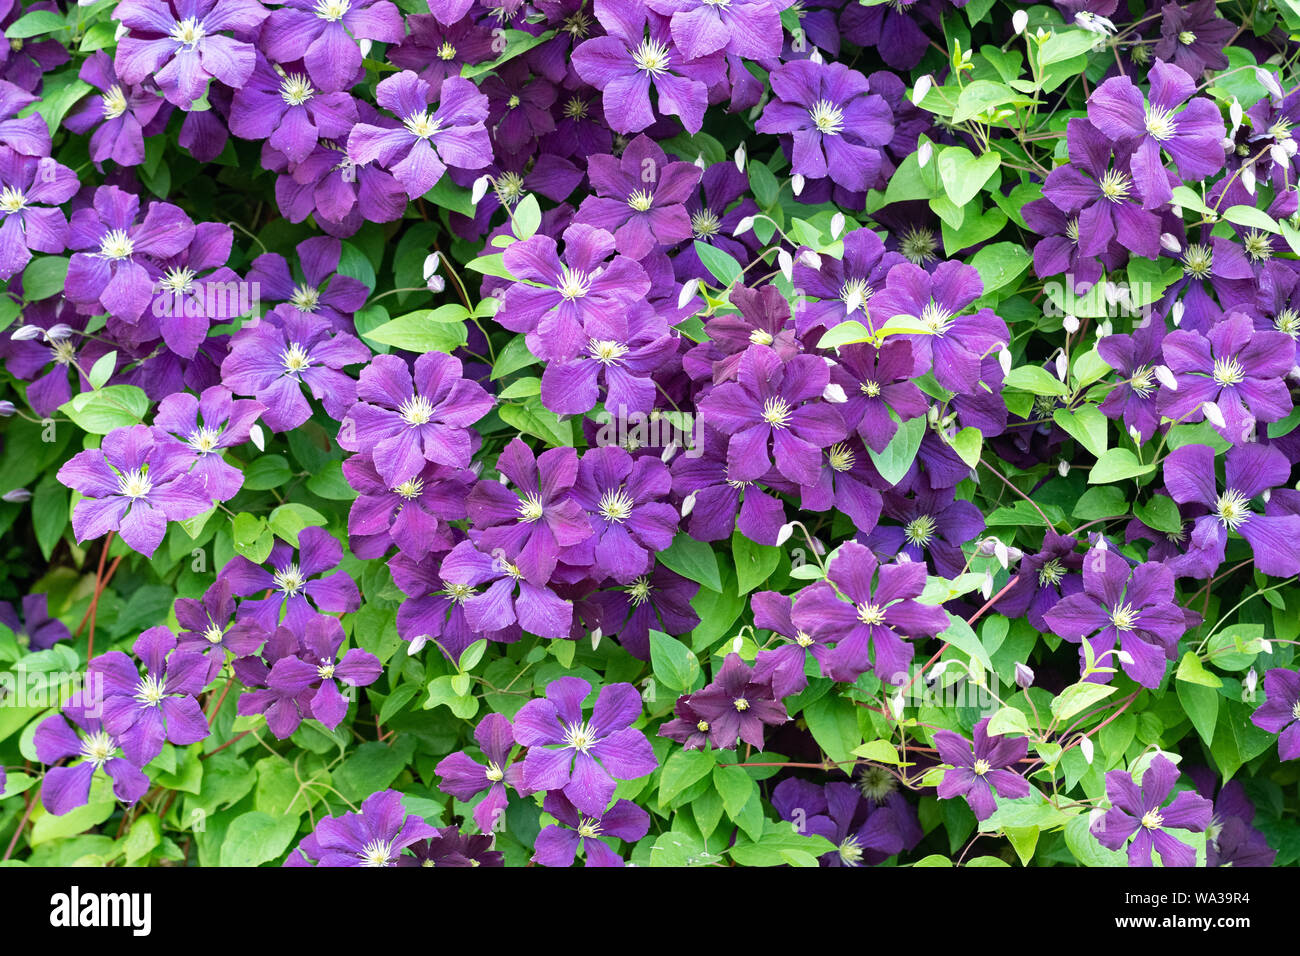 Clematis 'Etoile Violette' Stock Photo